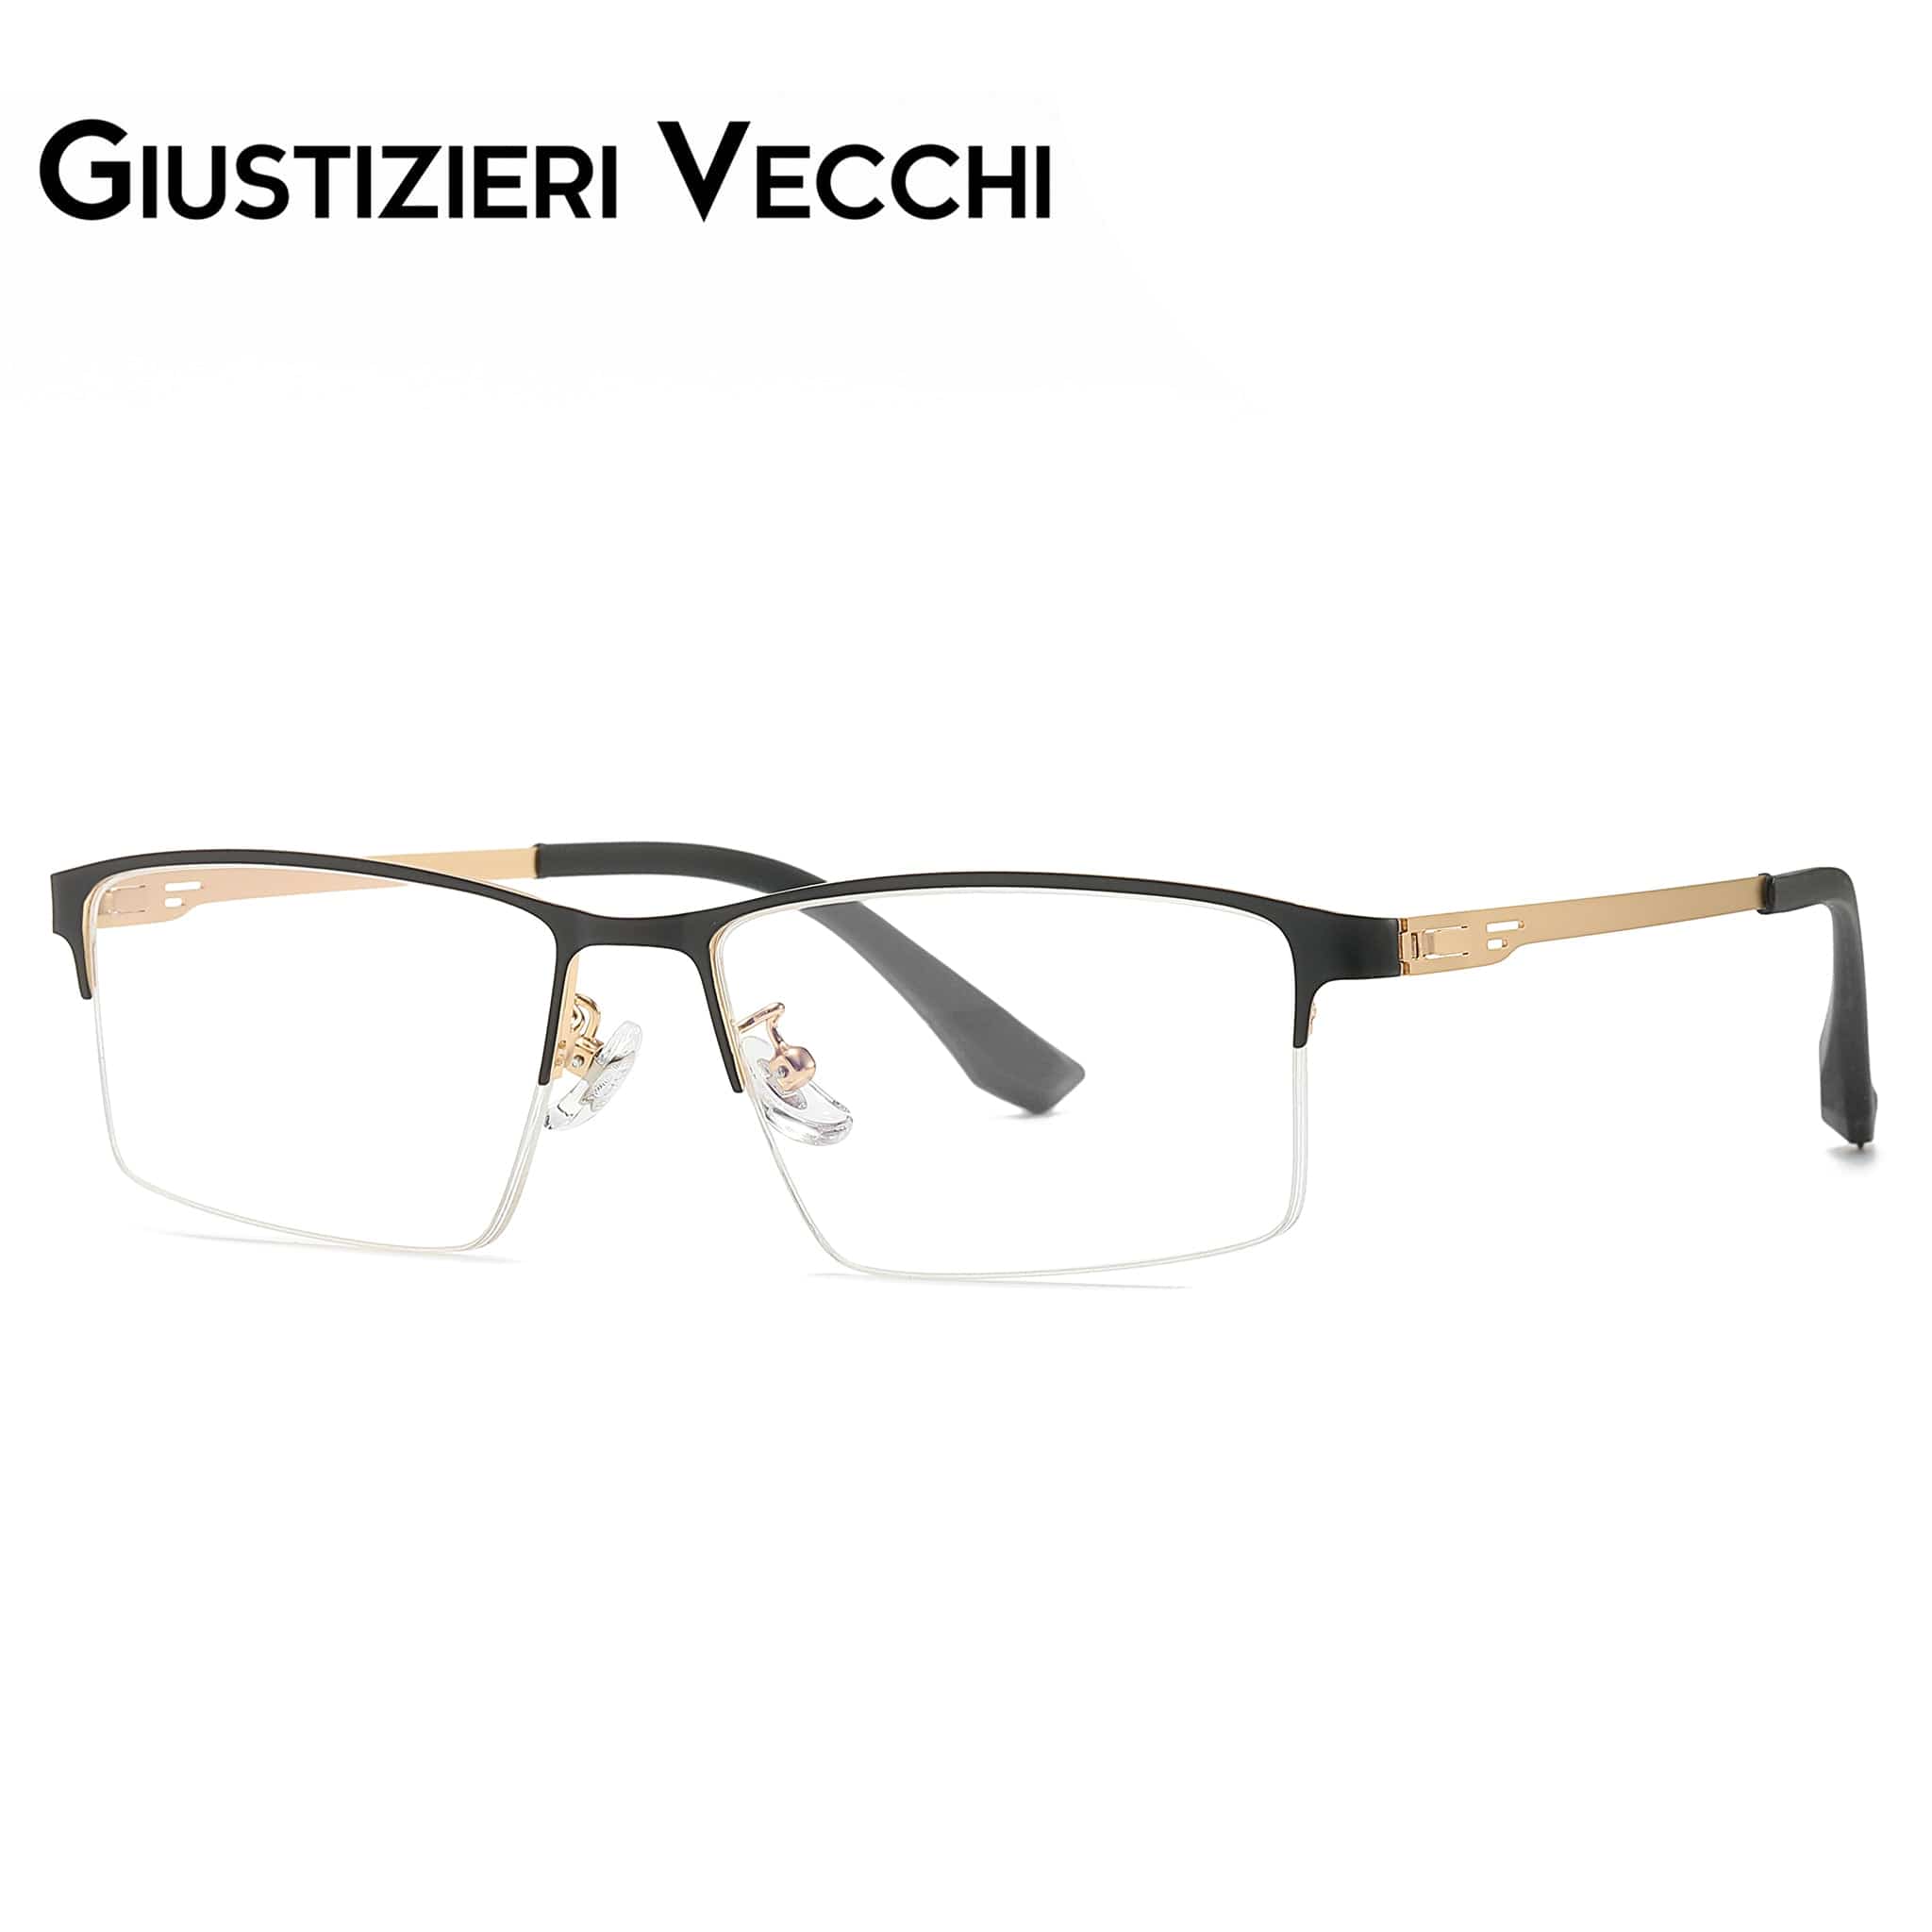 GIUSTIZIERI VECCHI Eyeglasses Large / Black with Gold FireFlow Duo